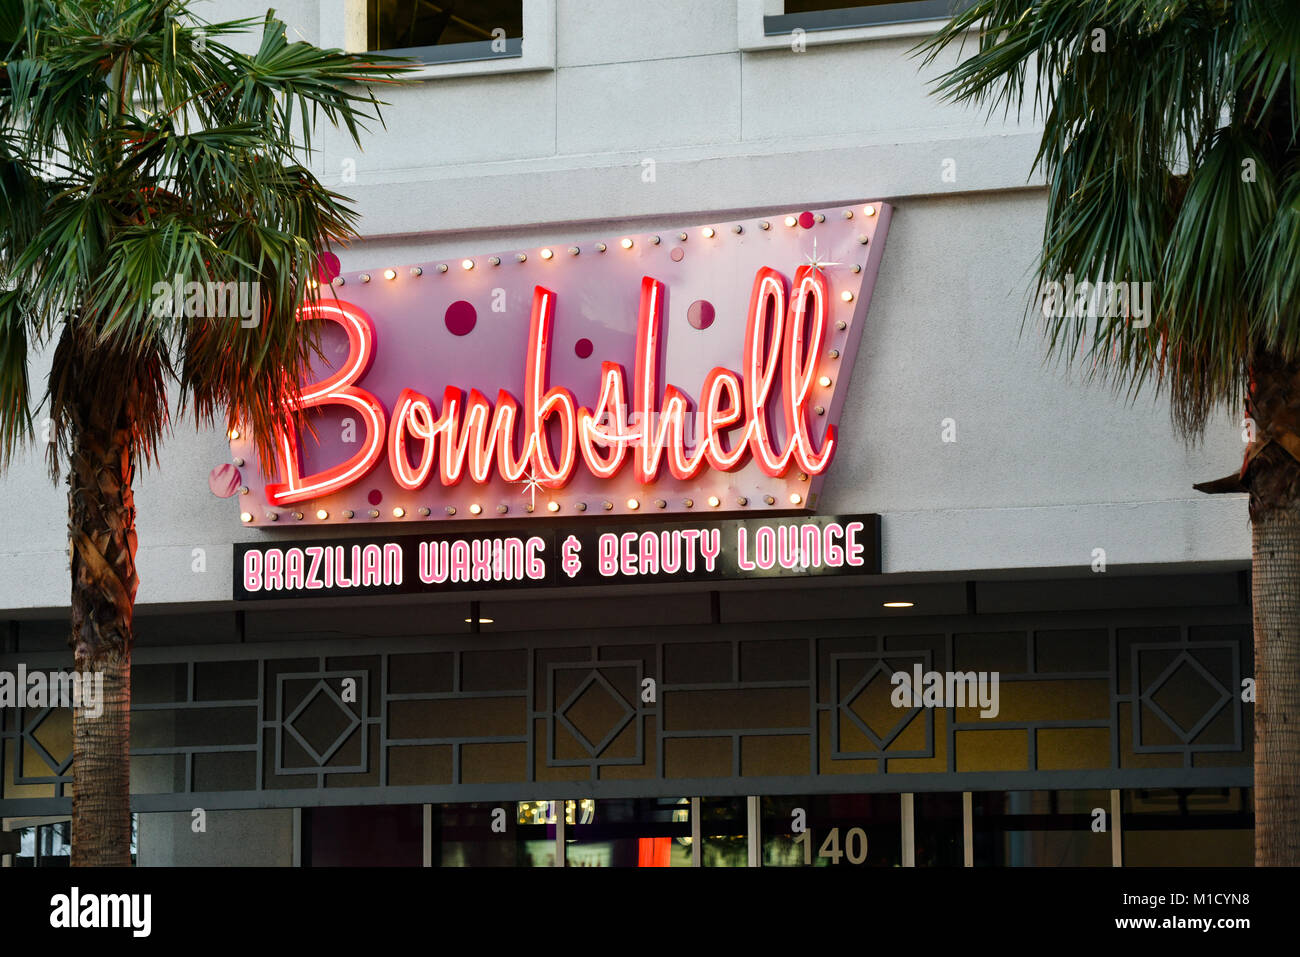 Bombshell, a Las Vegas beauty business in downtown Las Vegas, Nevada. Stock Photo